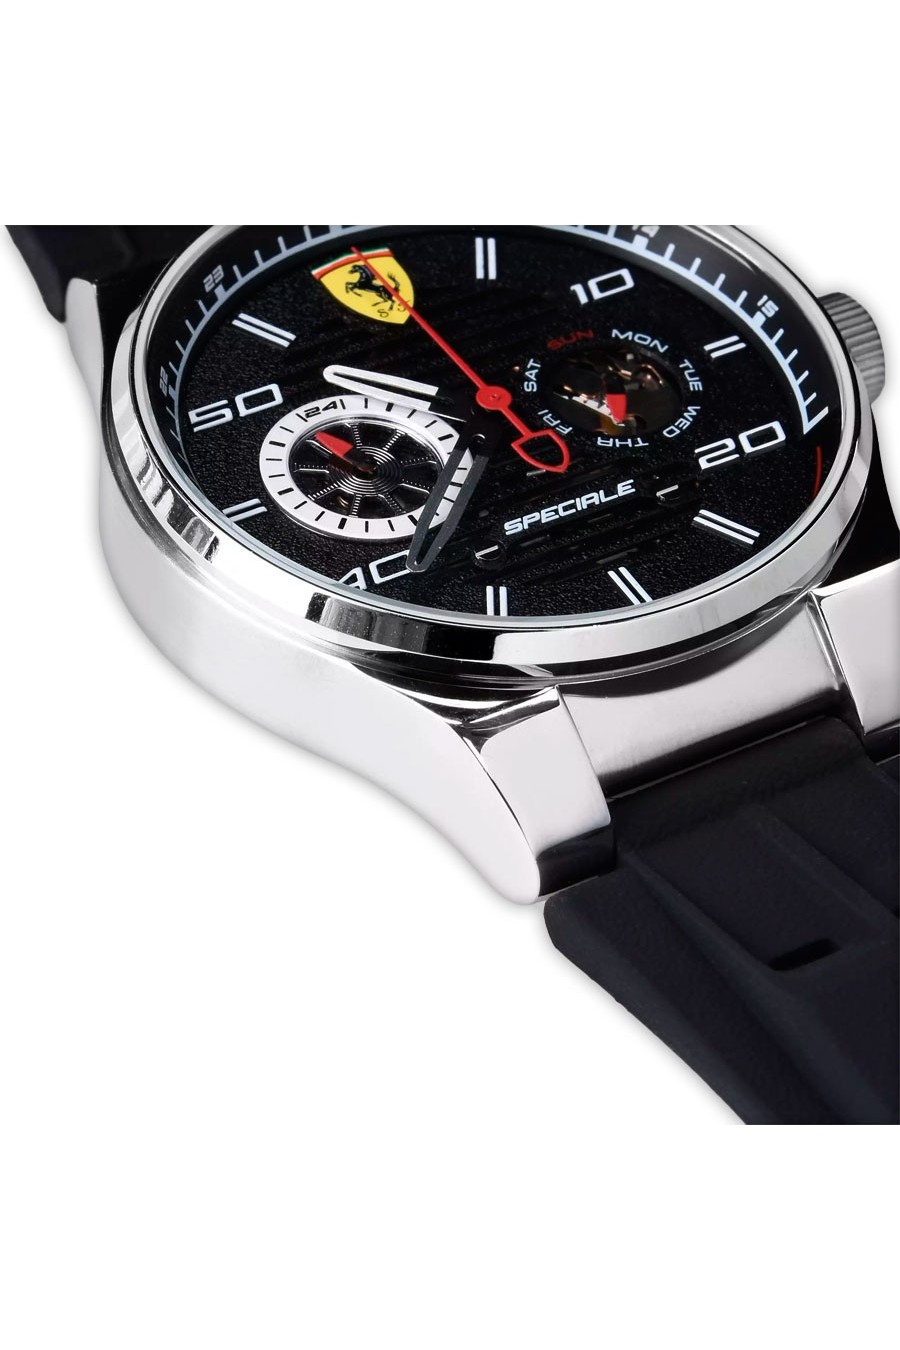 Orologio Scuderia Ferrari Speciale